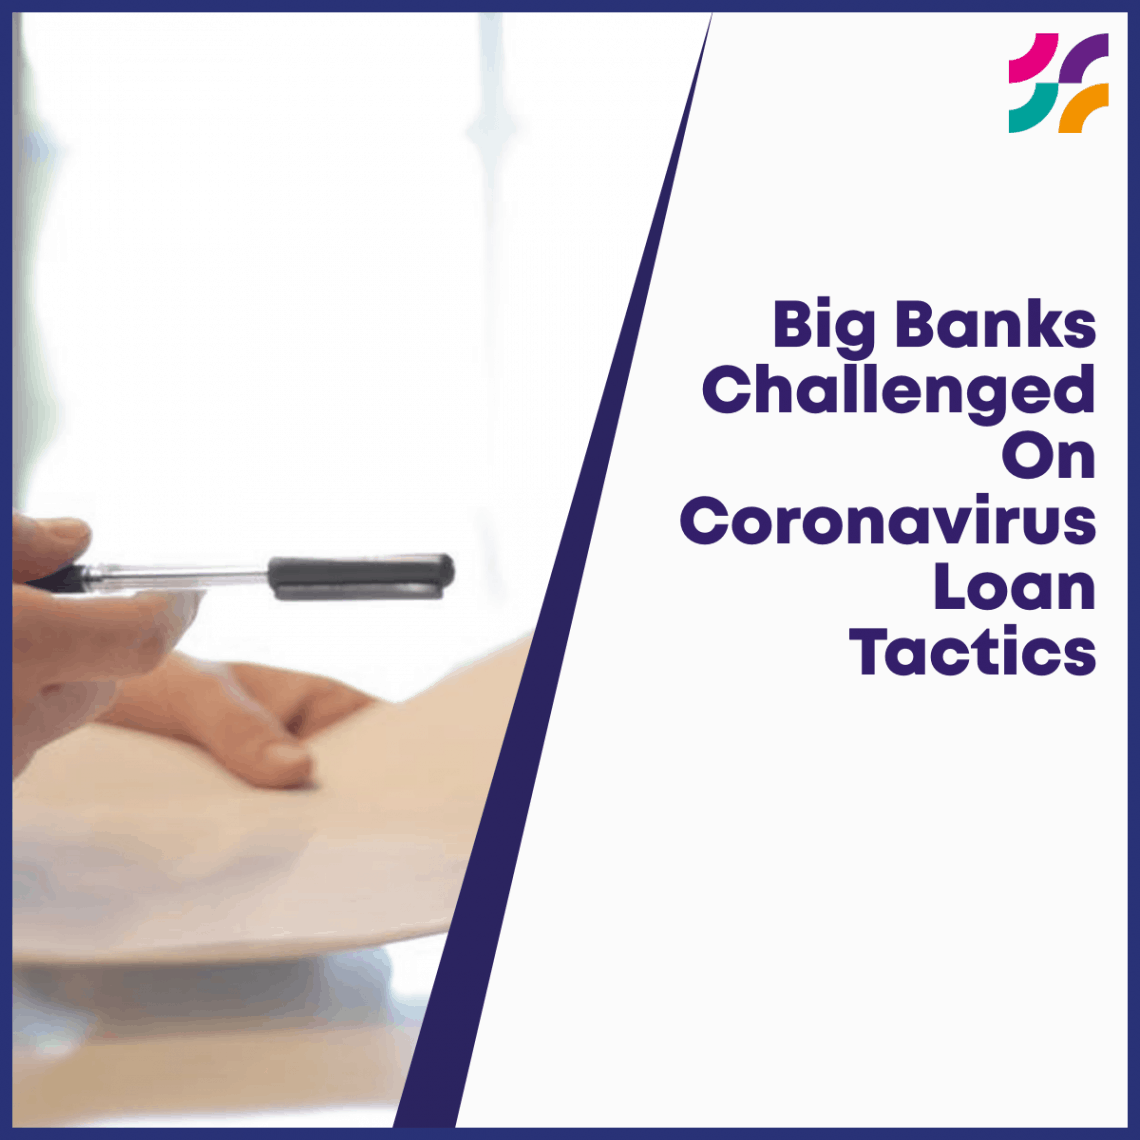 Big Banks Challenged On Coronavirus Loan Tactics